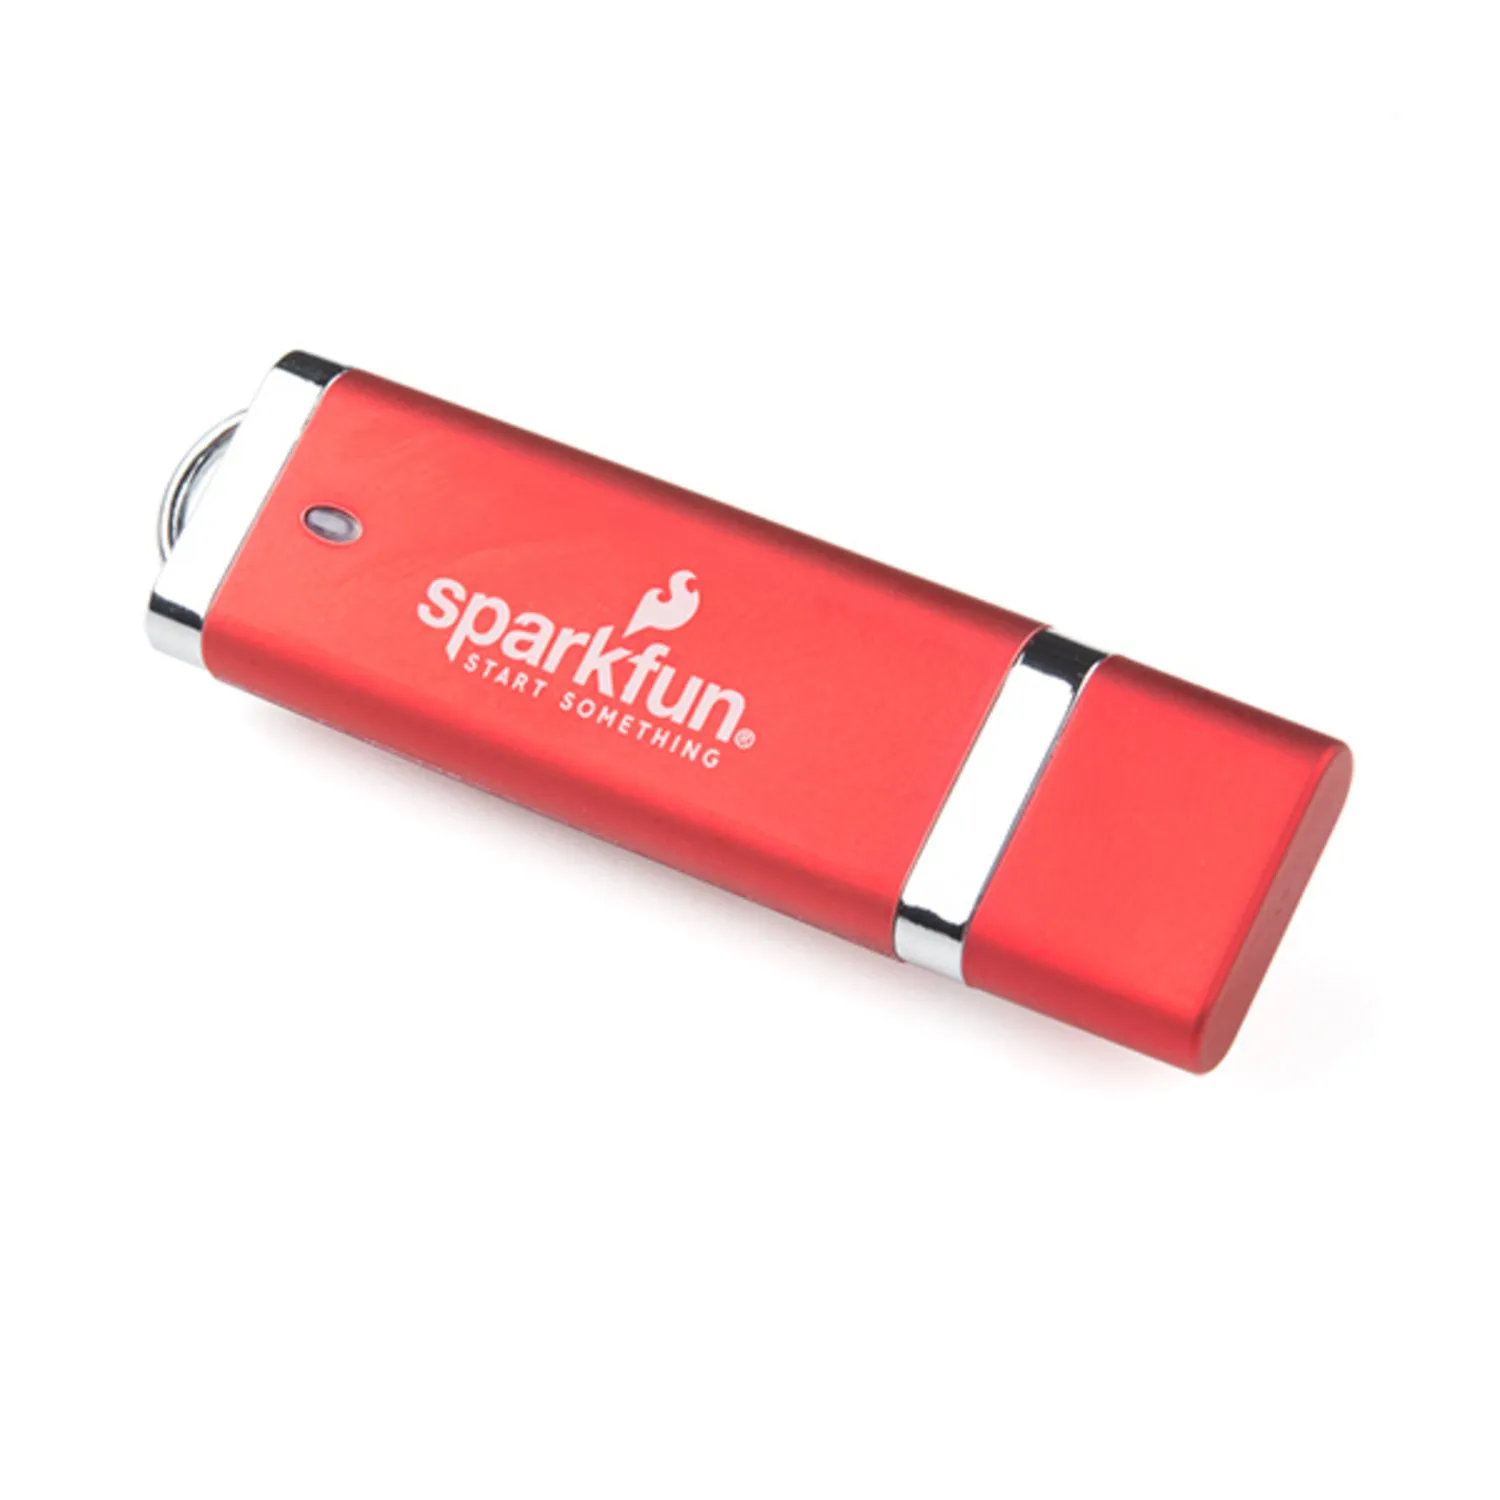 Photo of SparkFun USB Thumb Drive (16GB)